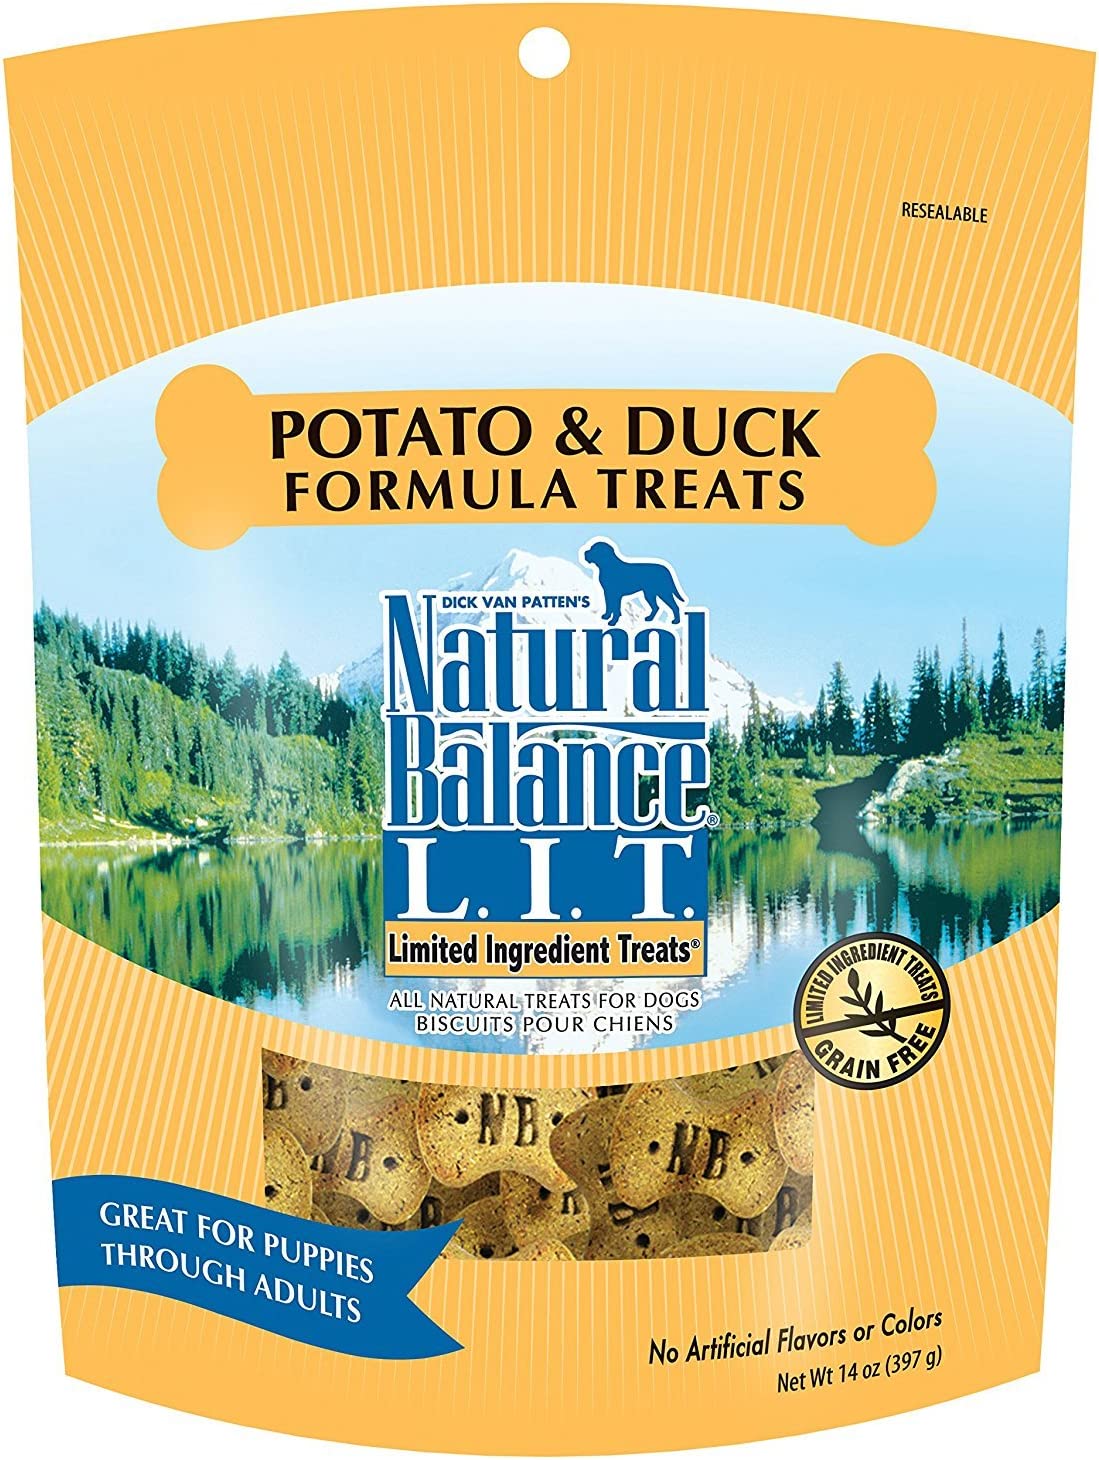 Natural Balance Limited Ingredient Dog Treats Potato & Duck Formula, 14 oz, 3 Pack